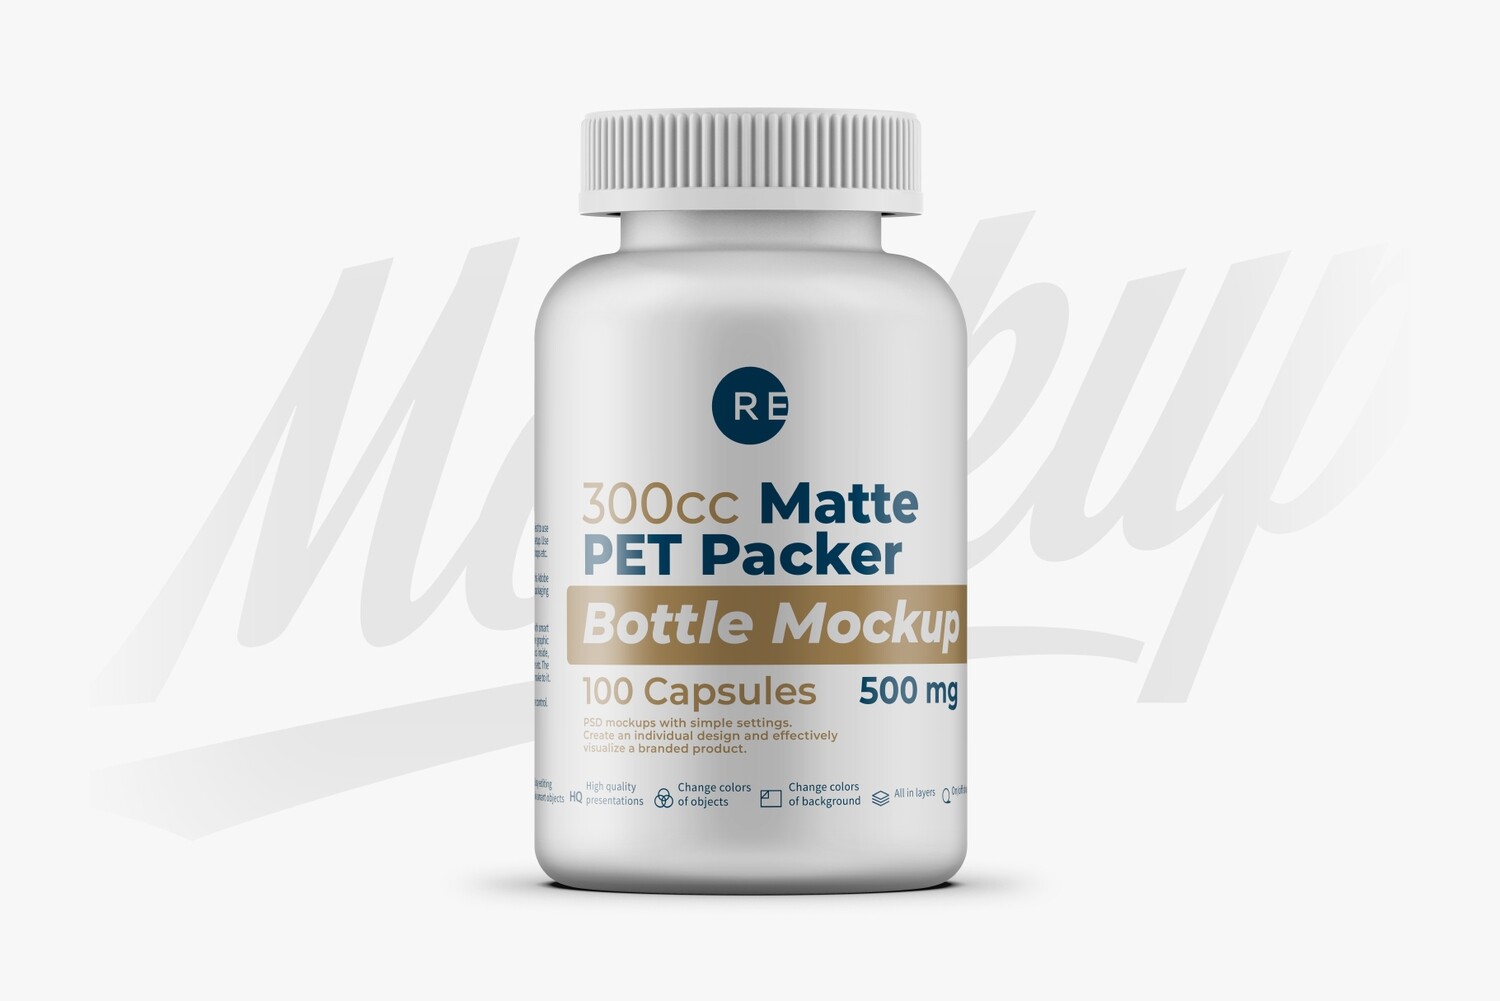 Matte Pills Bottle Mockup 300cc